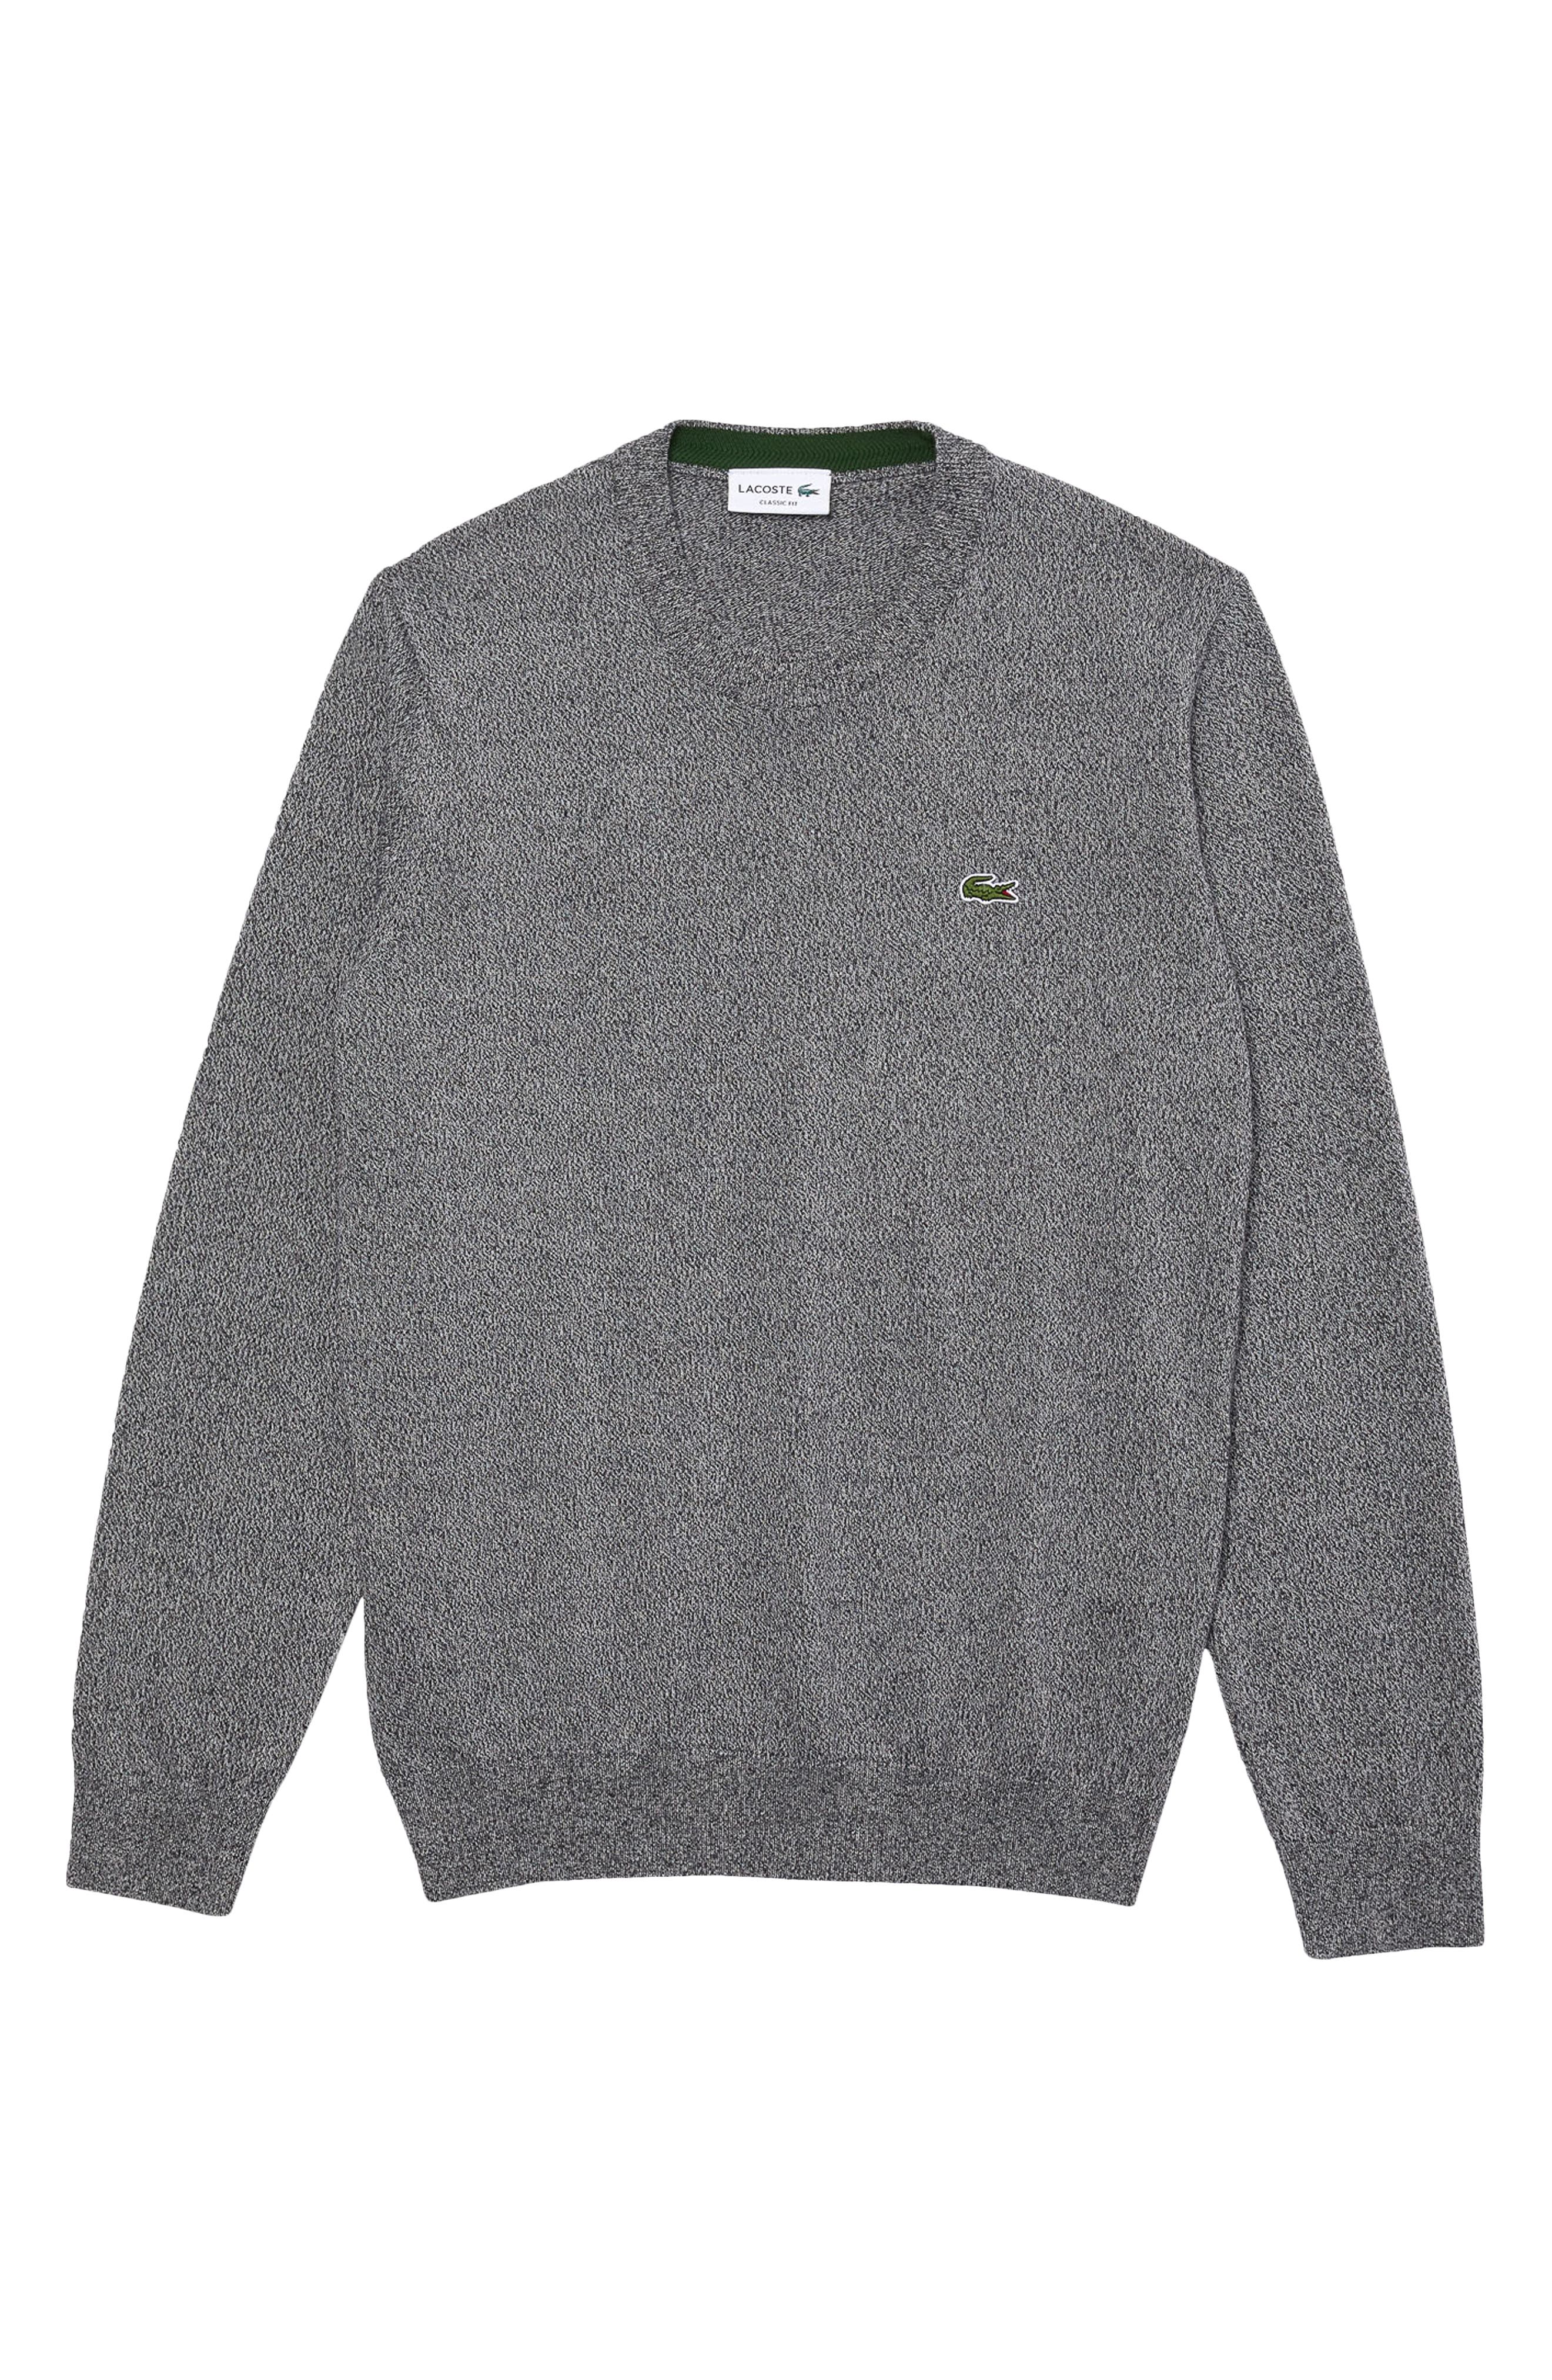 grey lacoste sweater